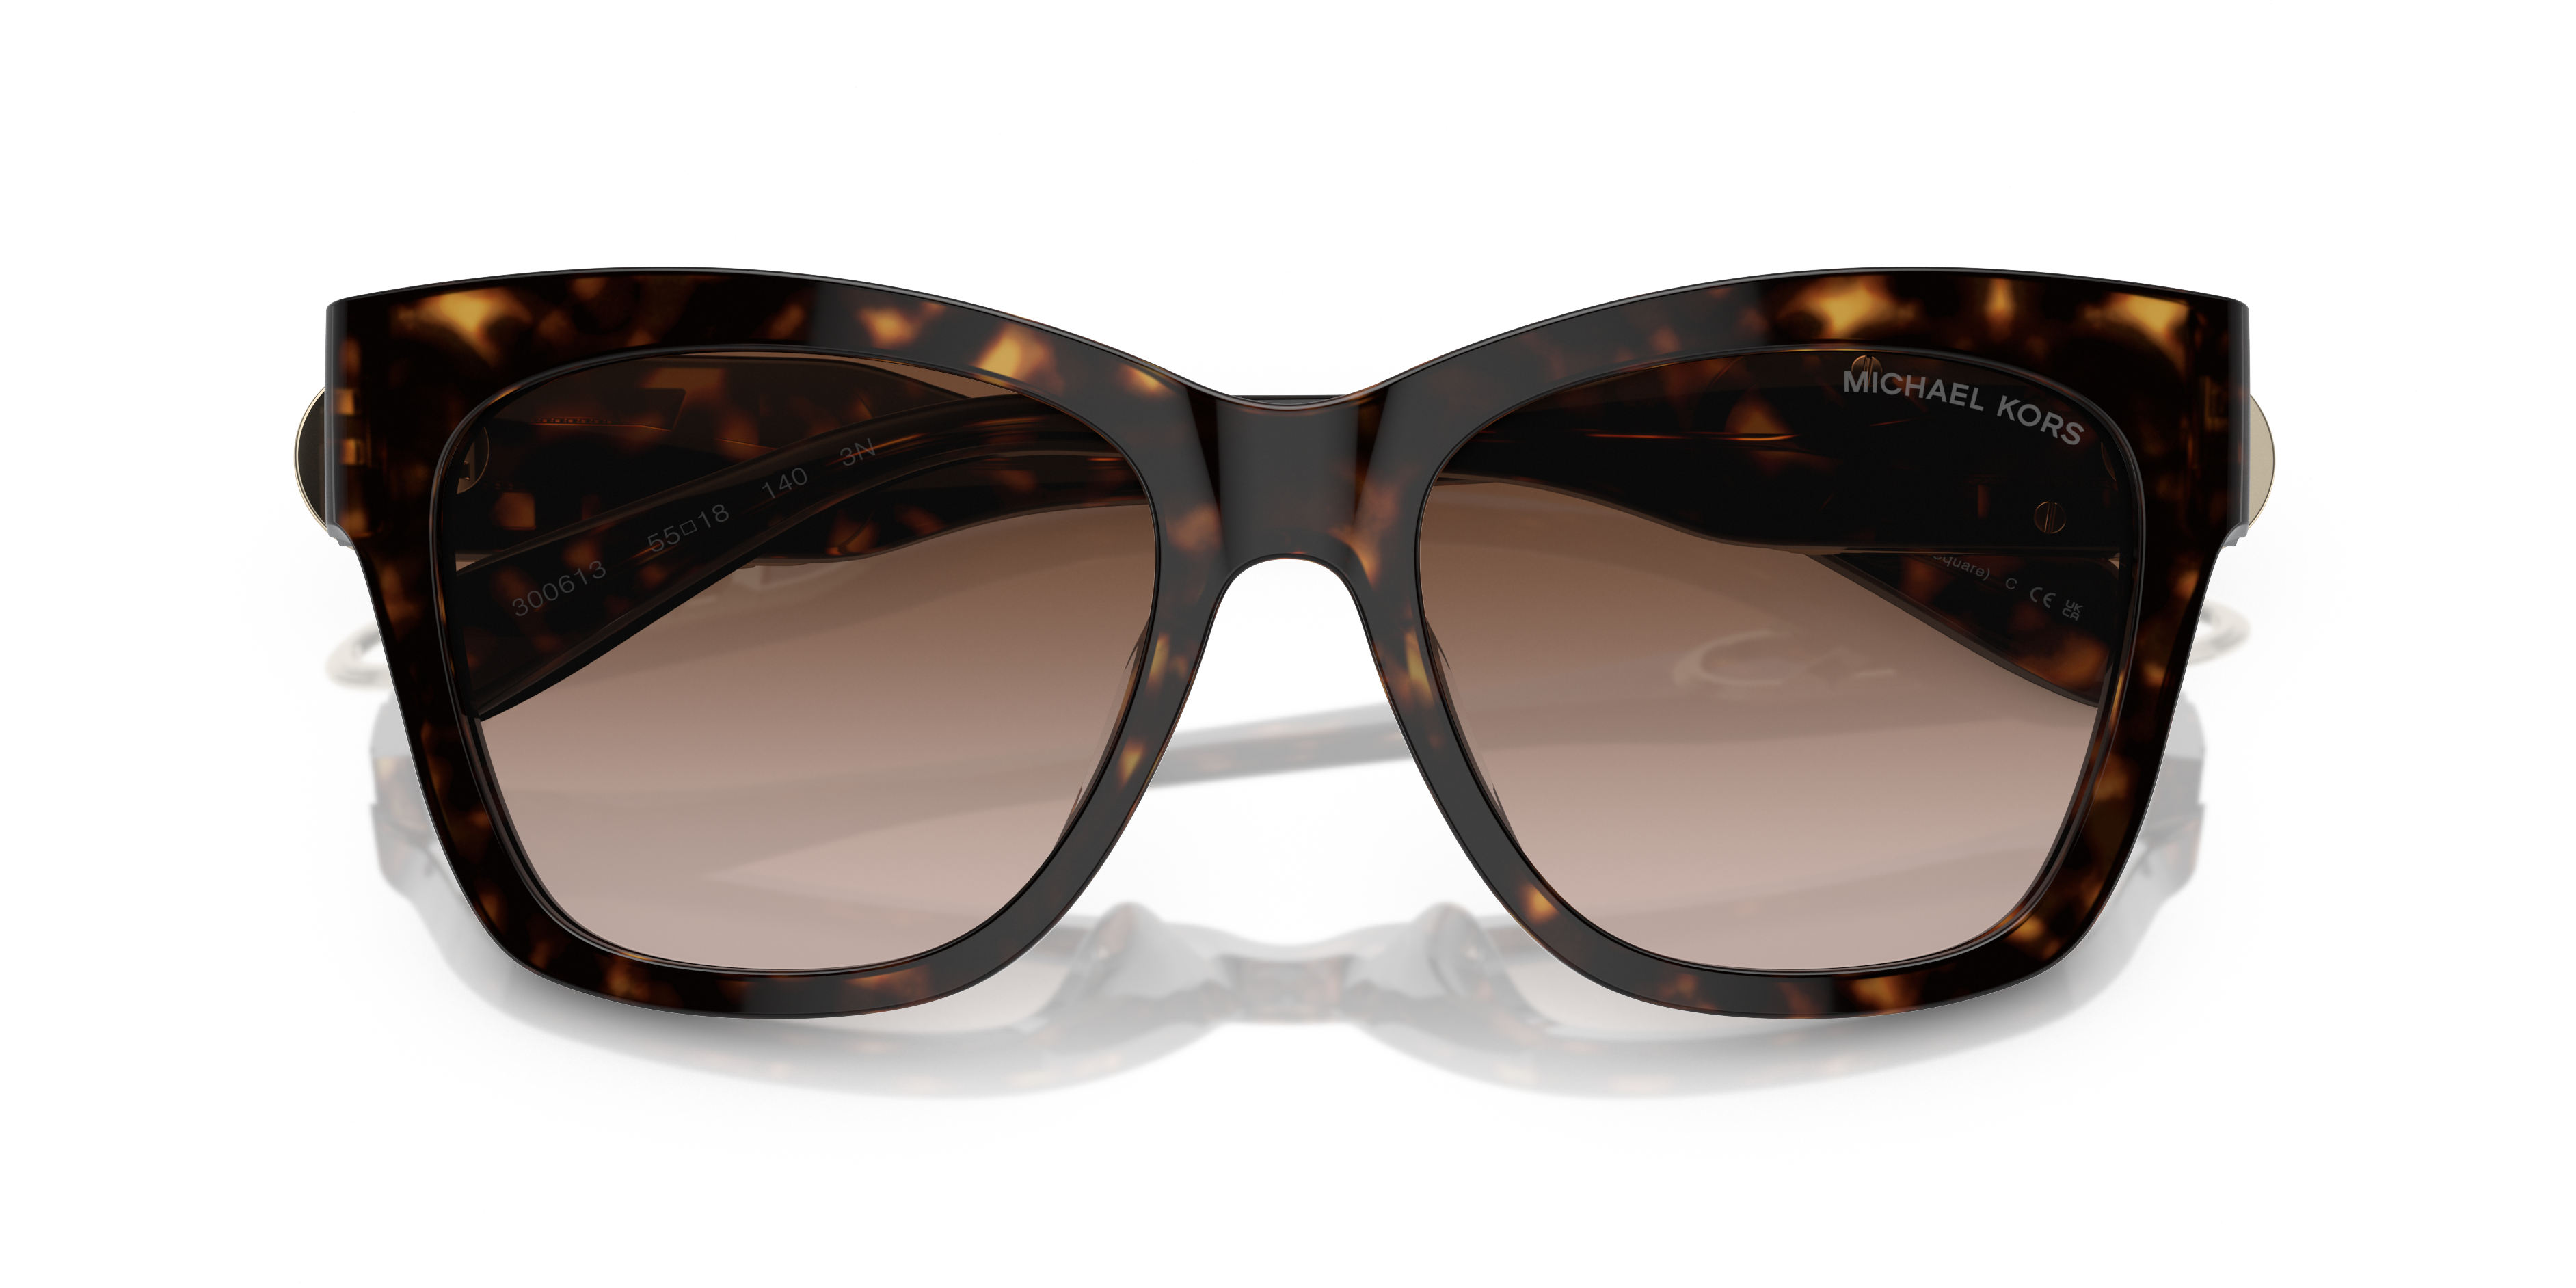 Michael Kors Women Eyeglasses by LensCrafters  Macys